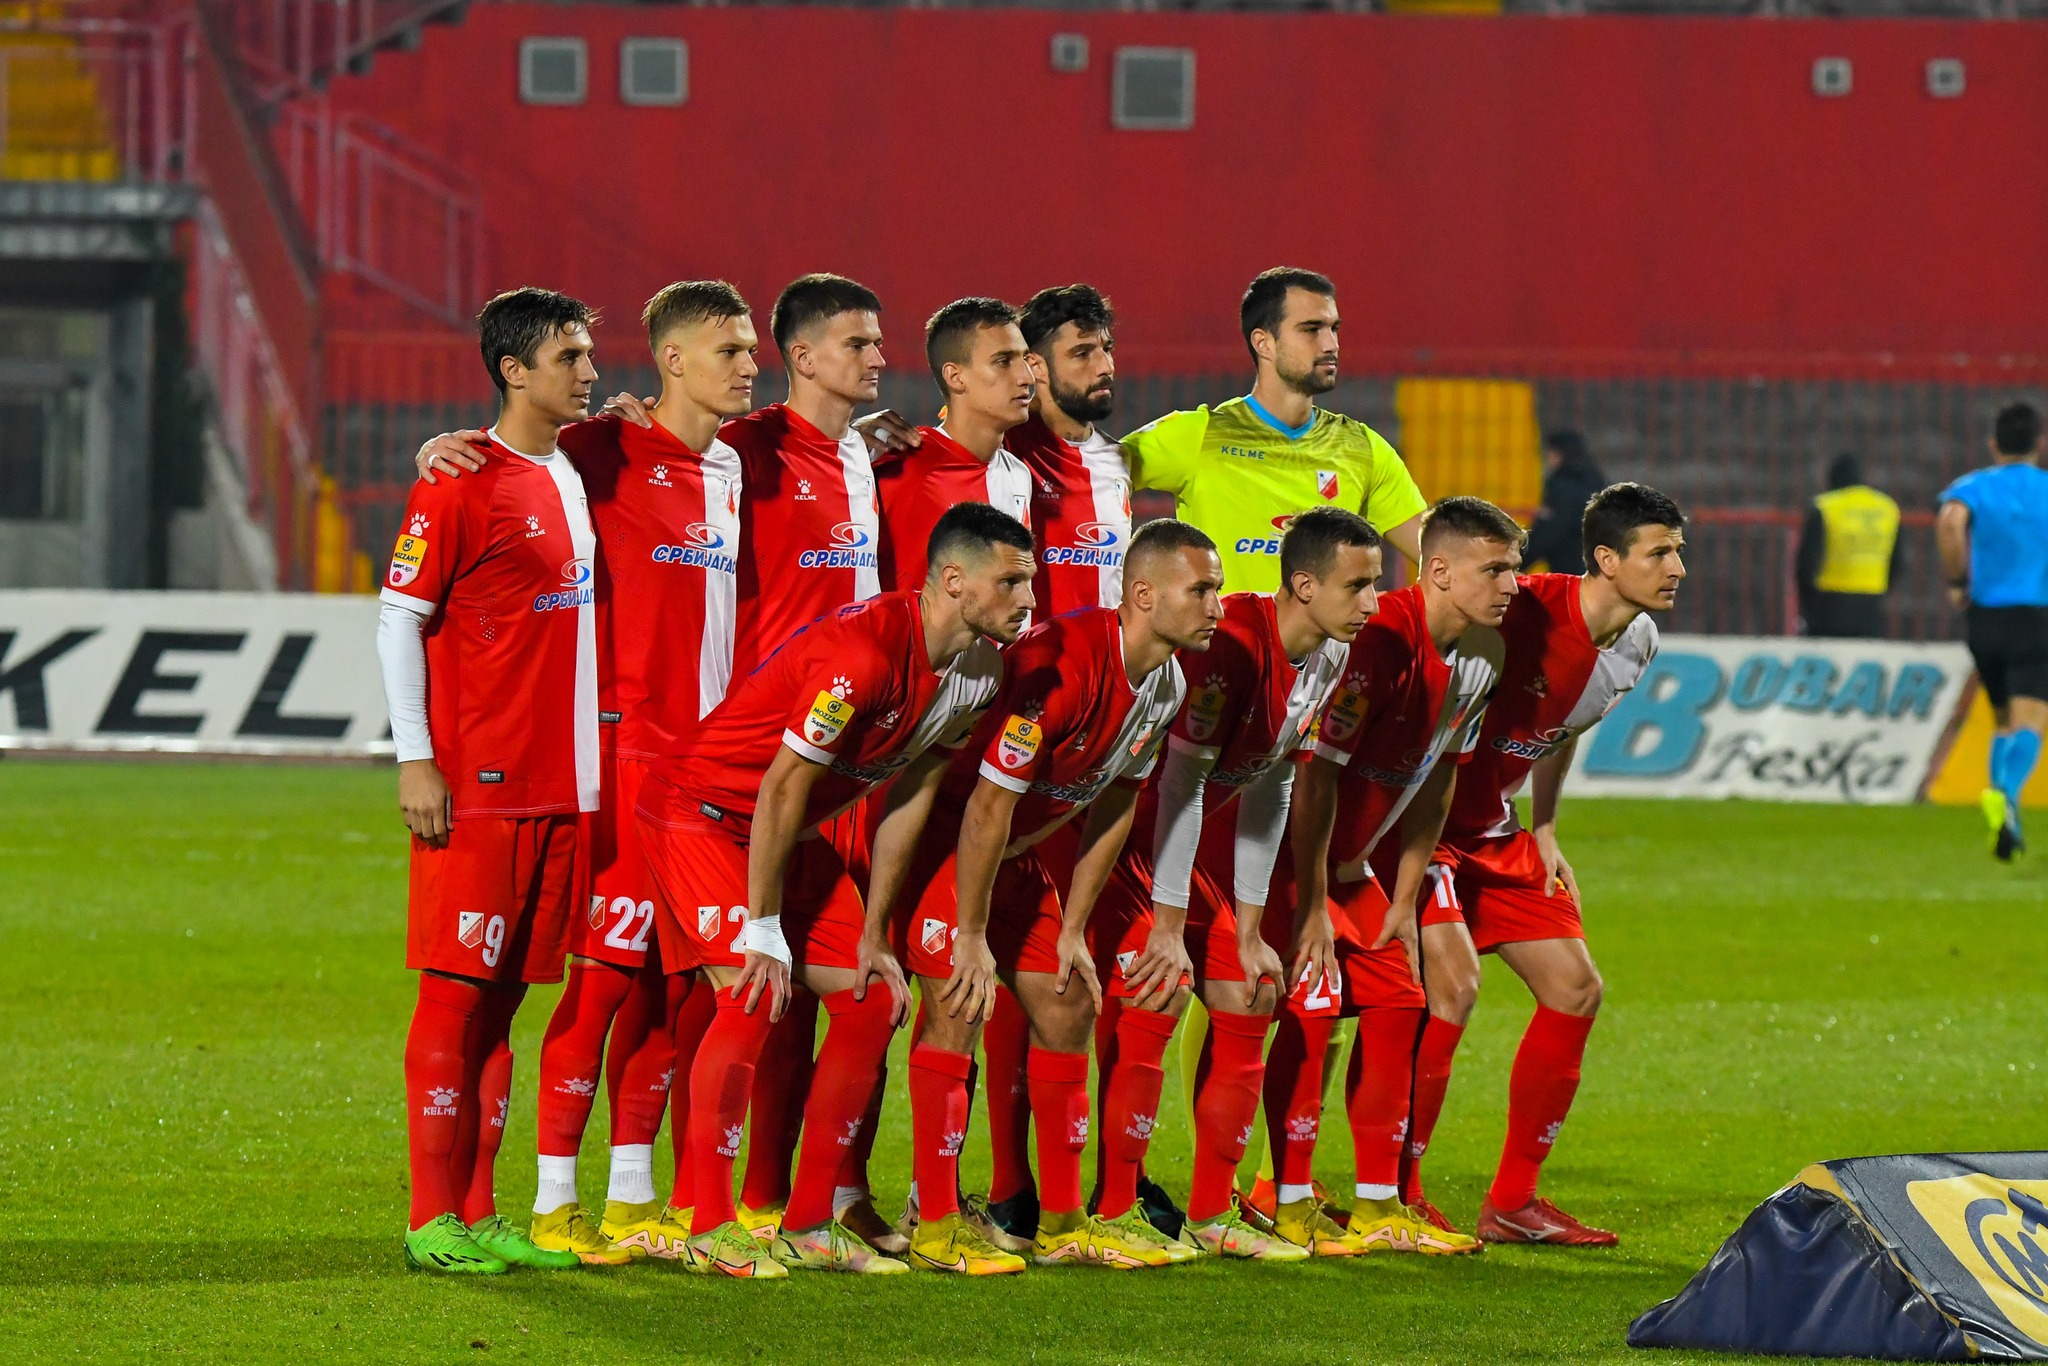 Serbia - FK Vojvodina Novi Sad Under 19 - Results, fixtures, squad,  statistics, photos, videos and news - Soccerway